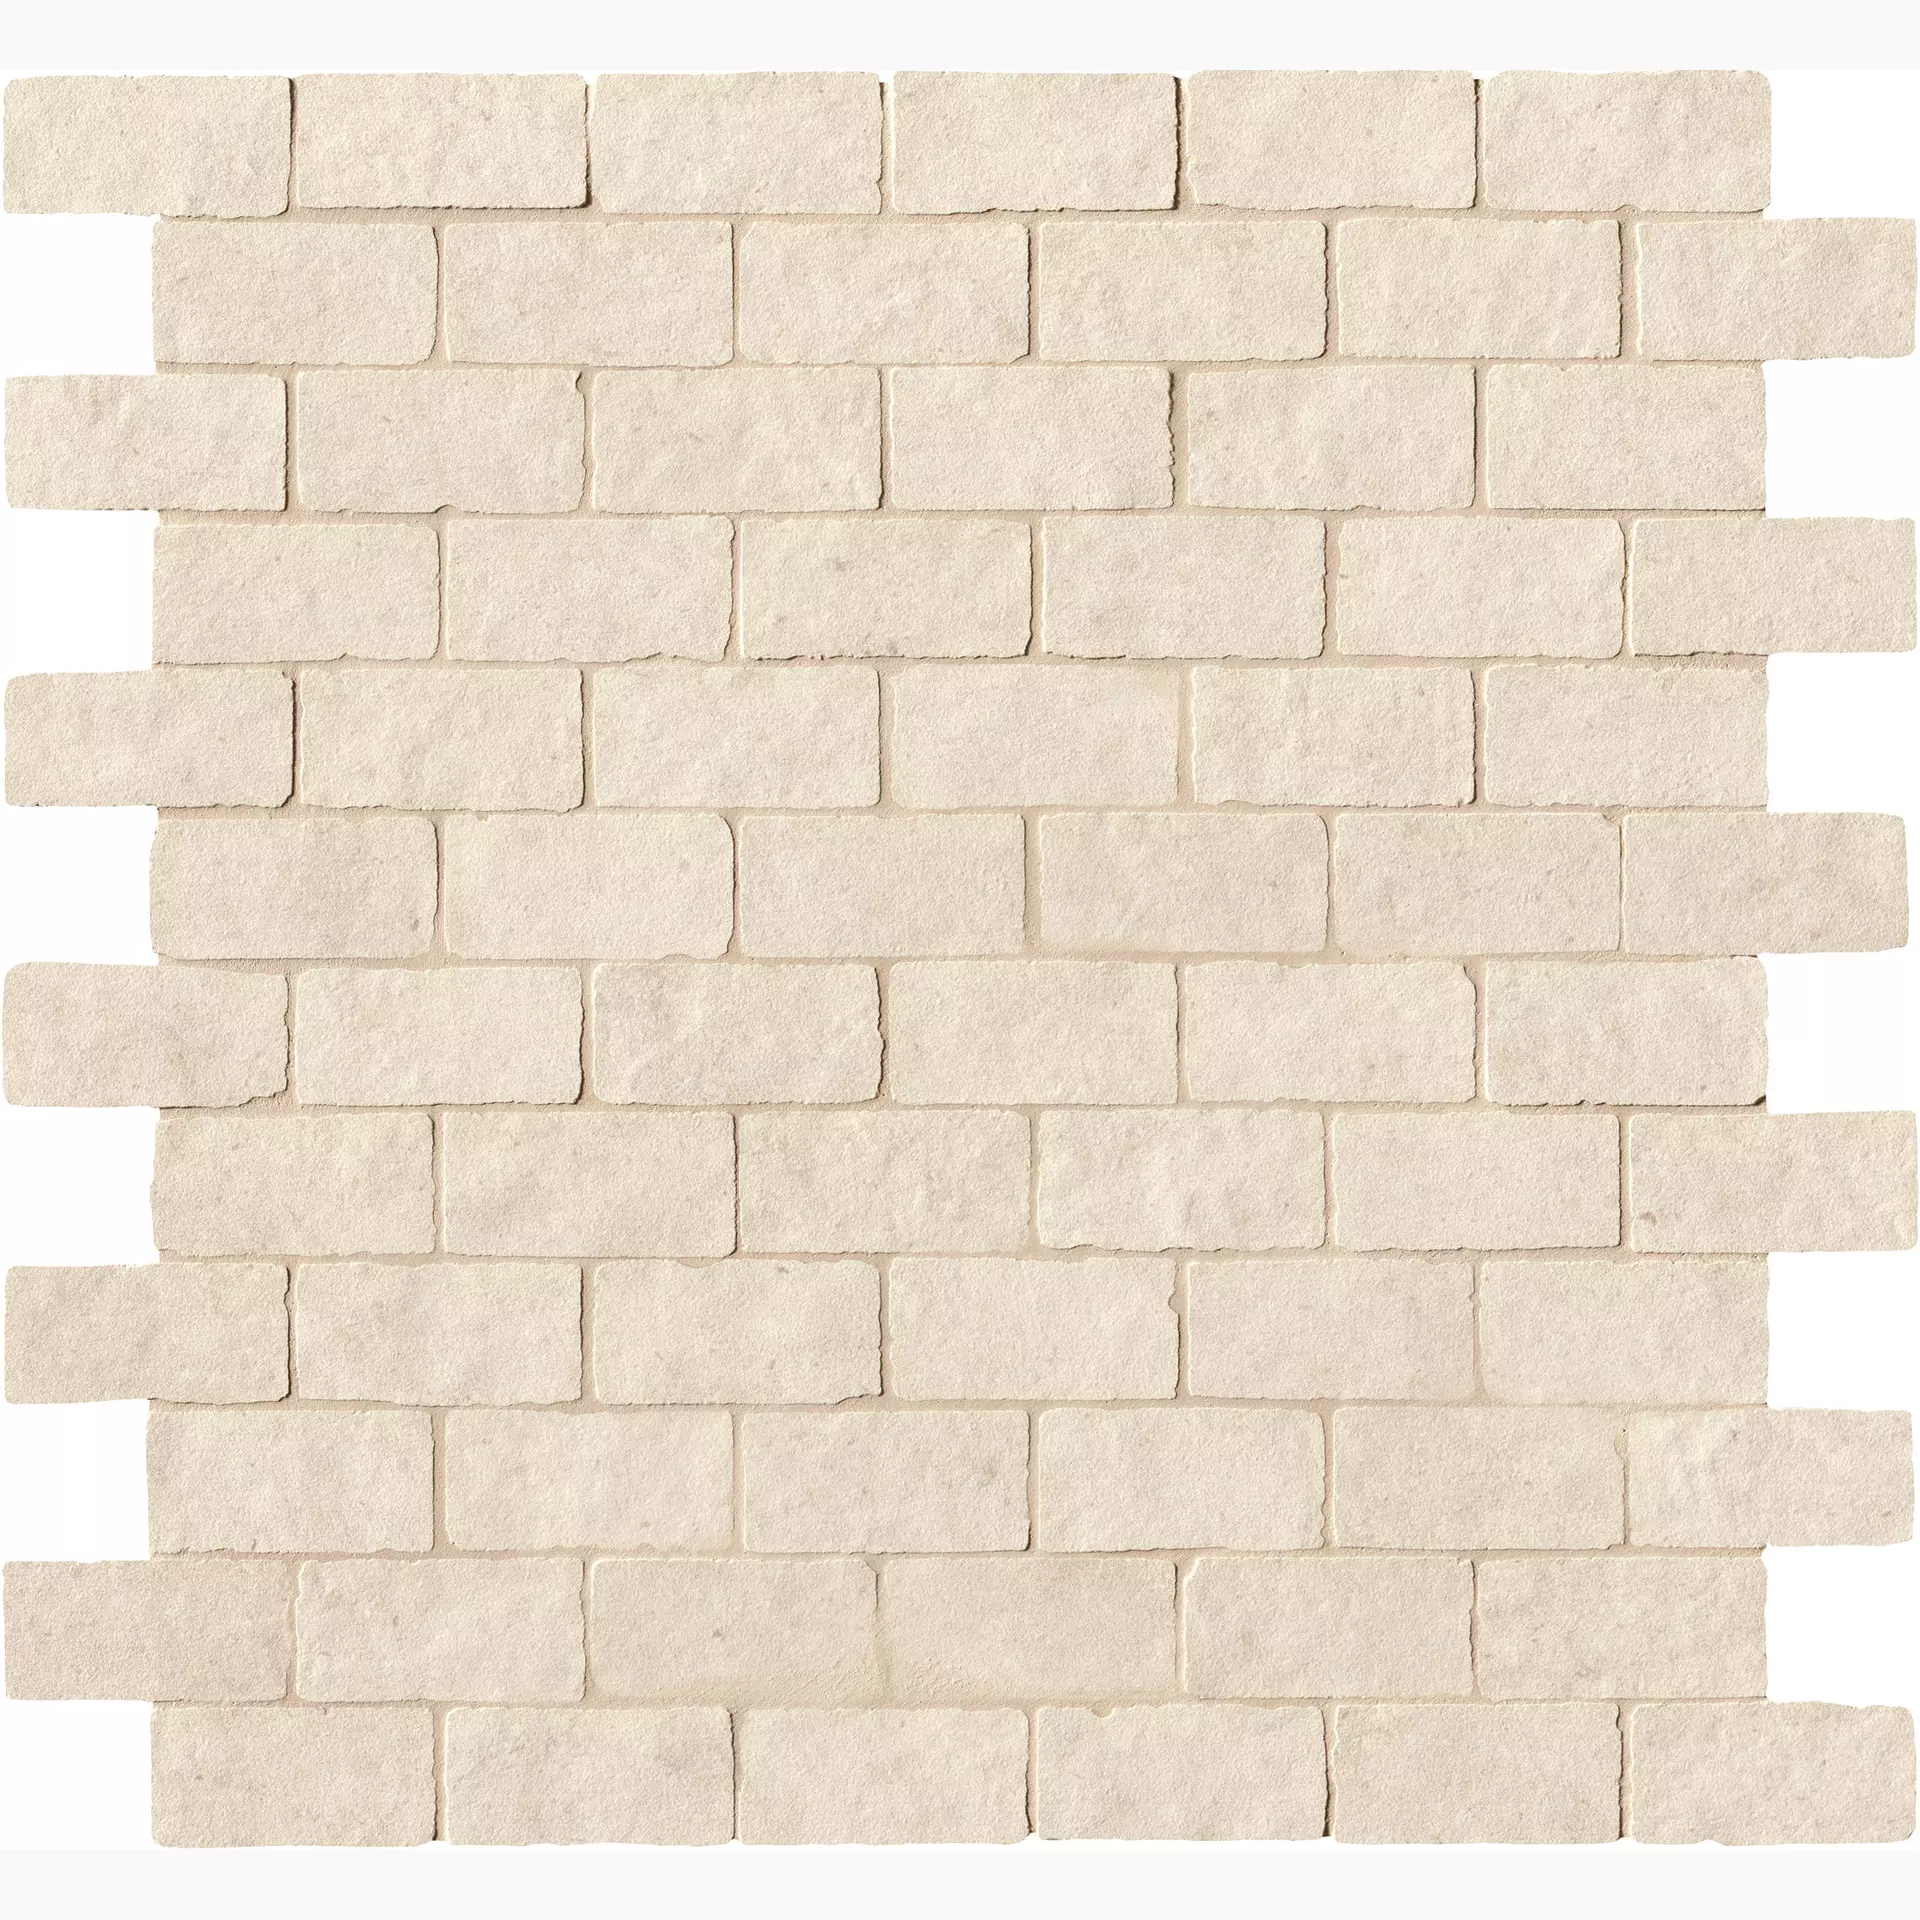 FAP Lumina Stone Beige Anticato Macromosaico Brick fOMJ 30,5x30,5cm